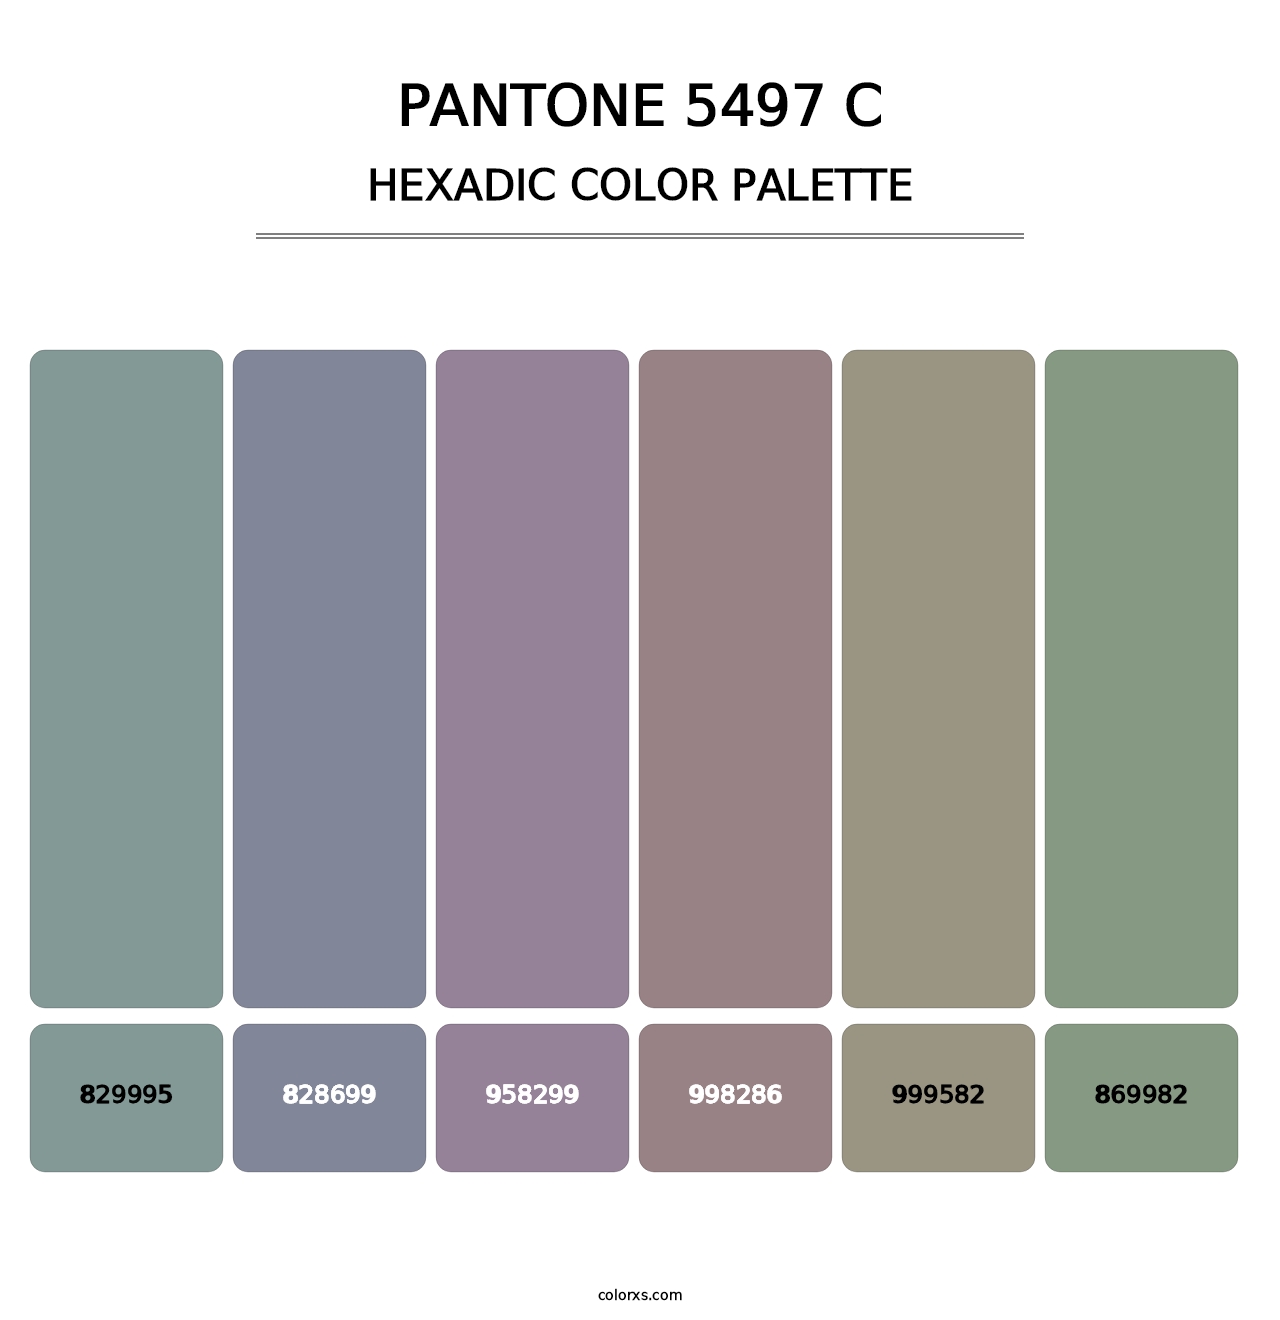 PANTONE 5497 C - Hexadic Color Palette